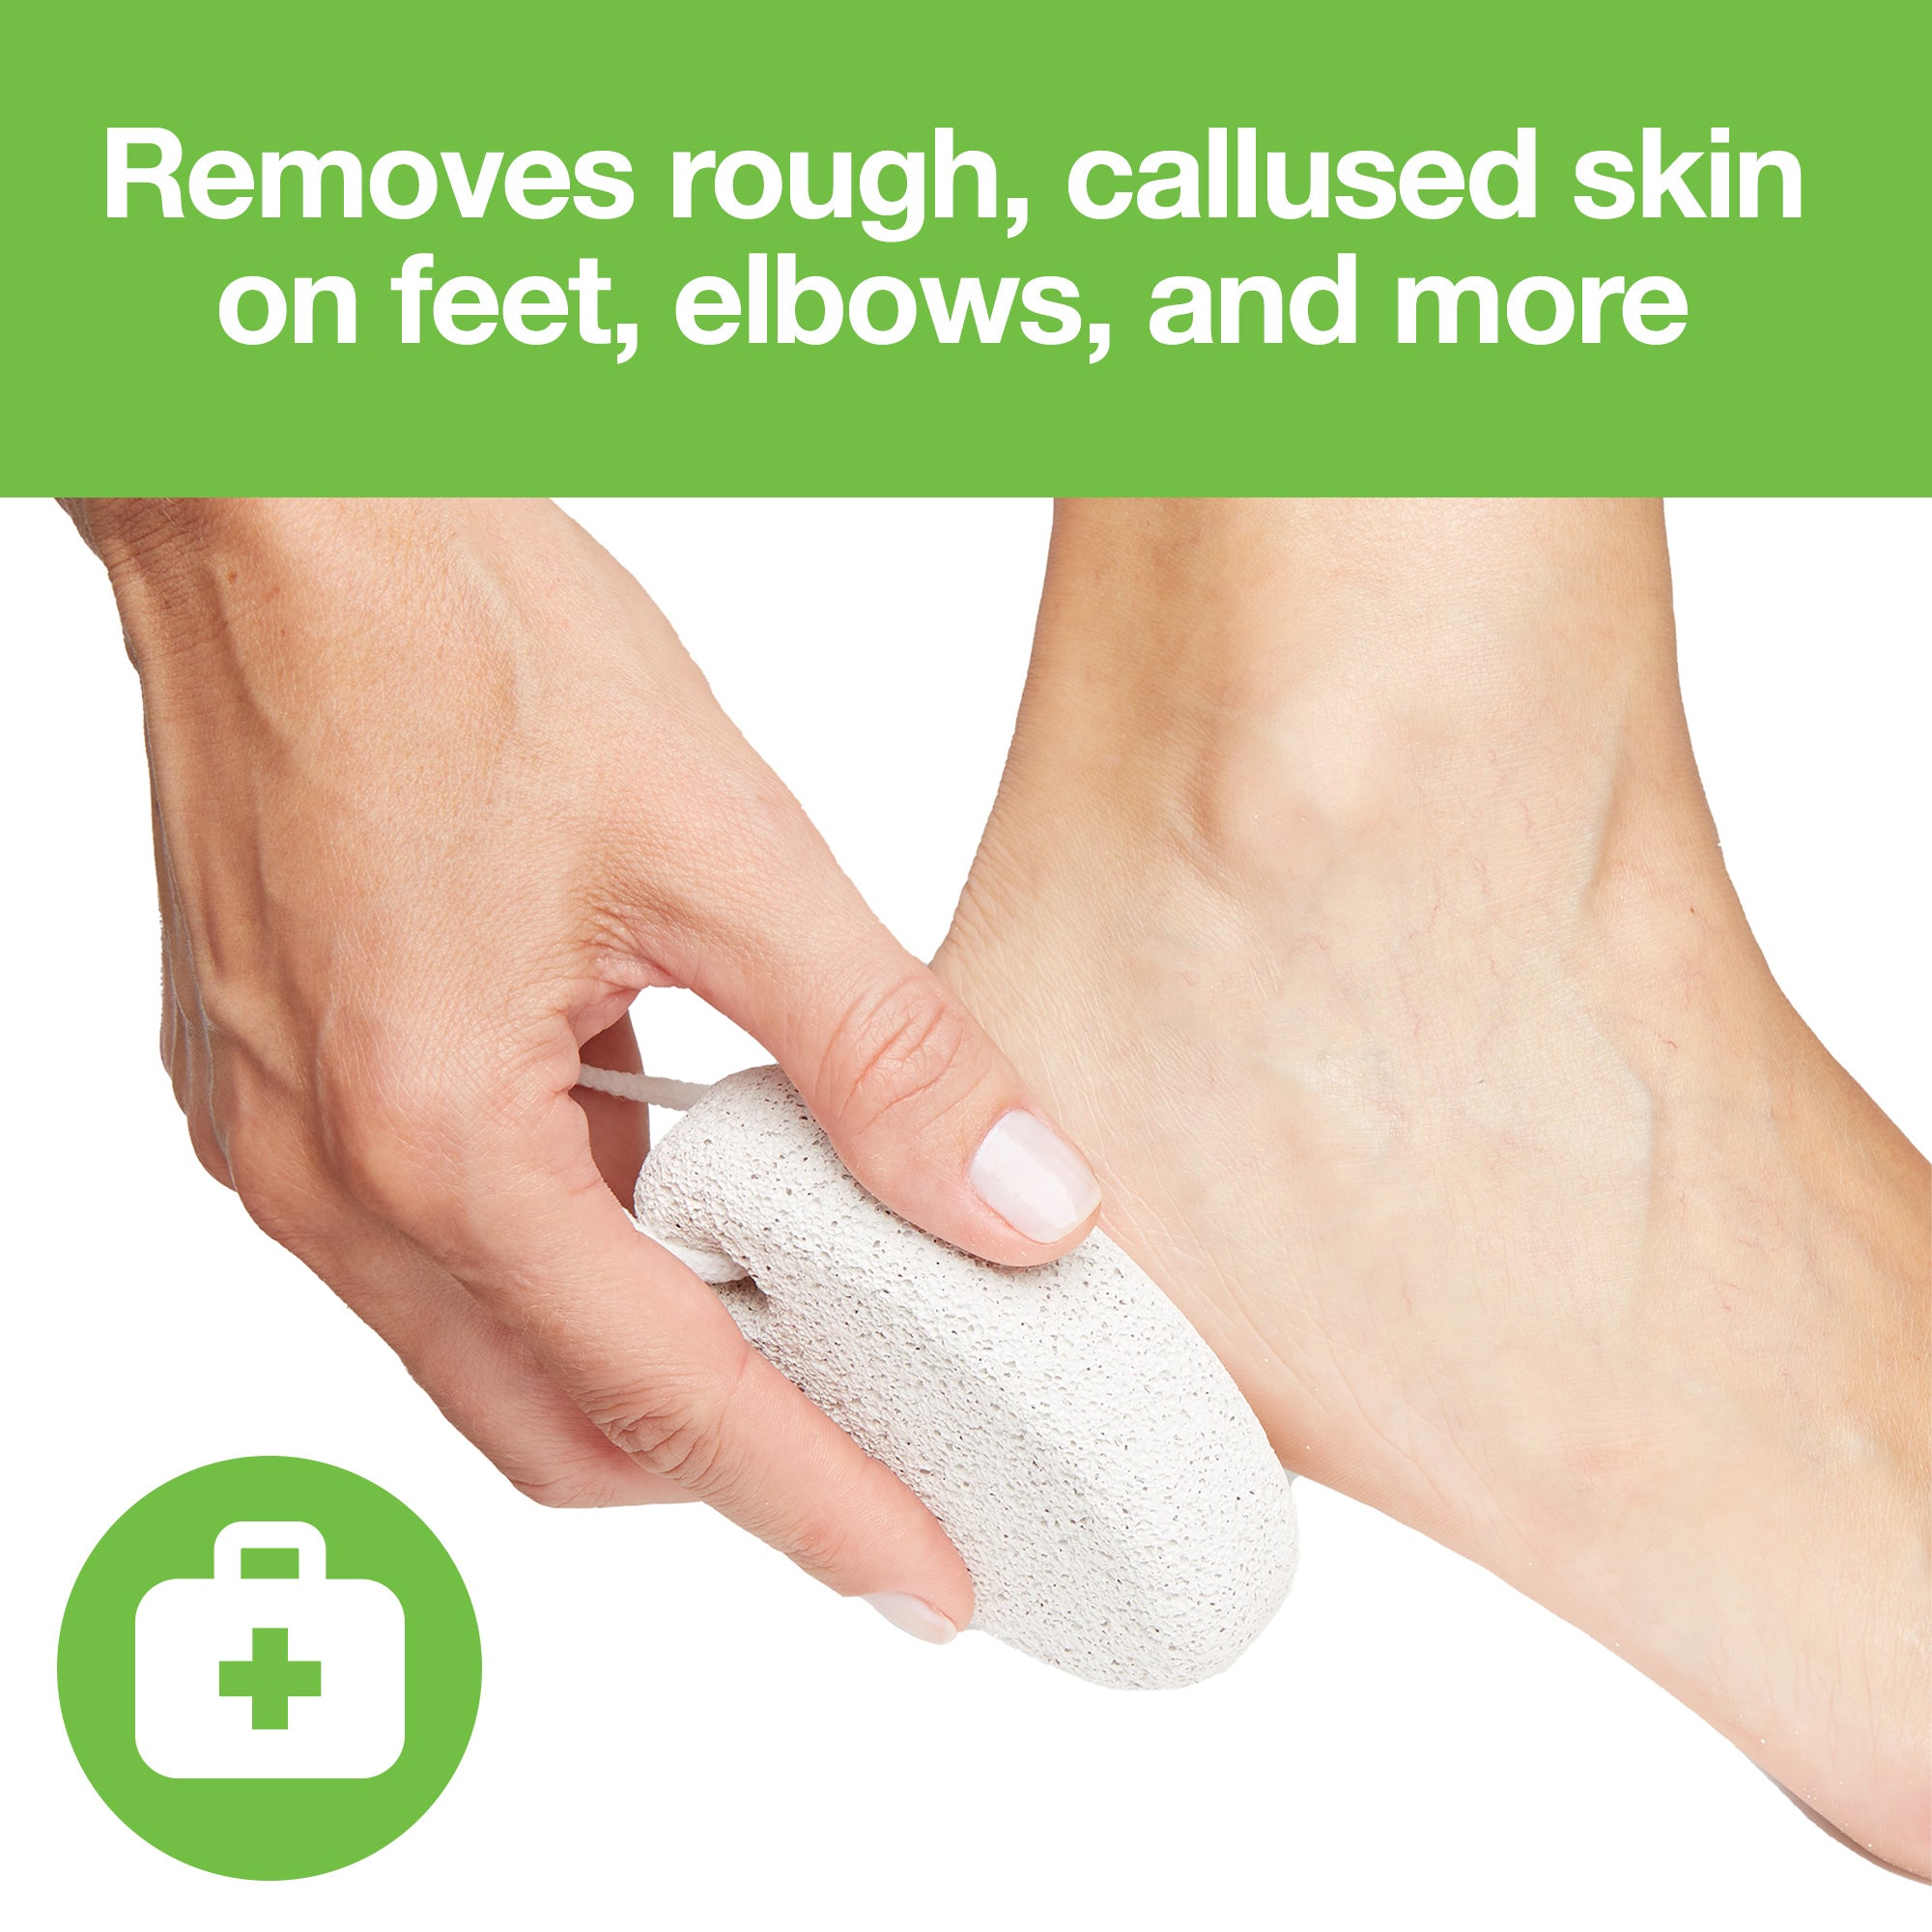 Callus Removal Foot Pack